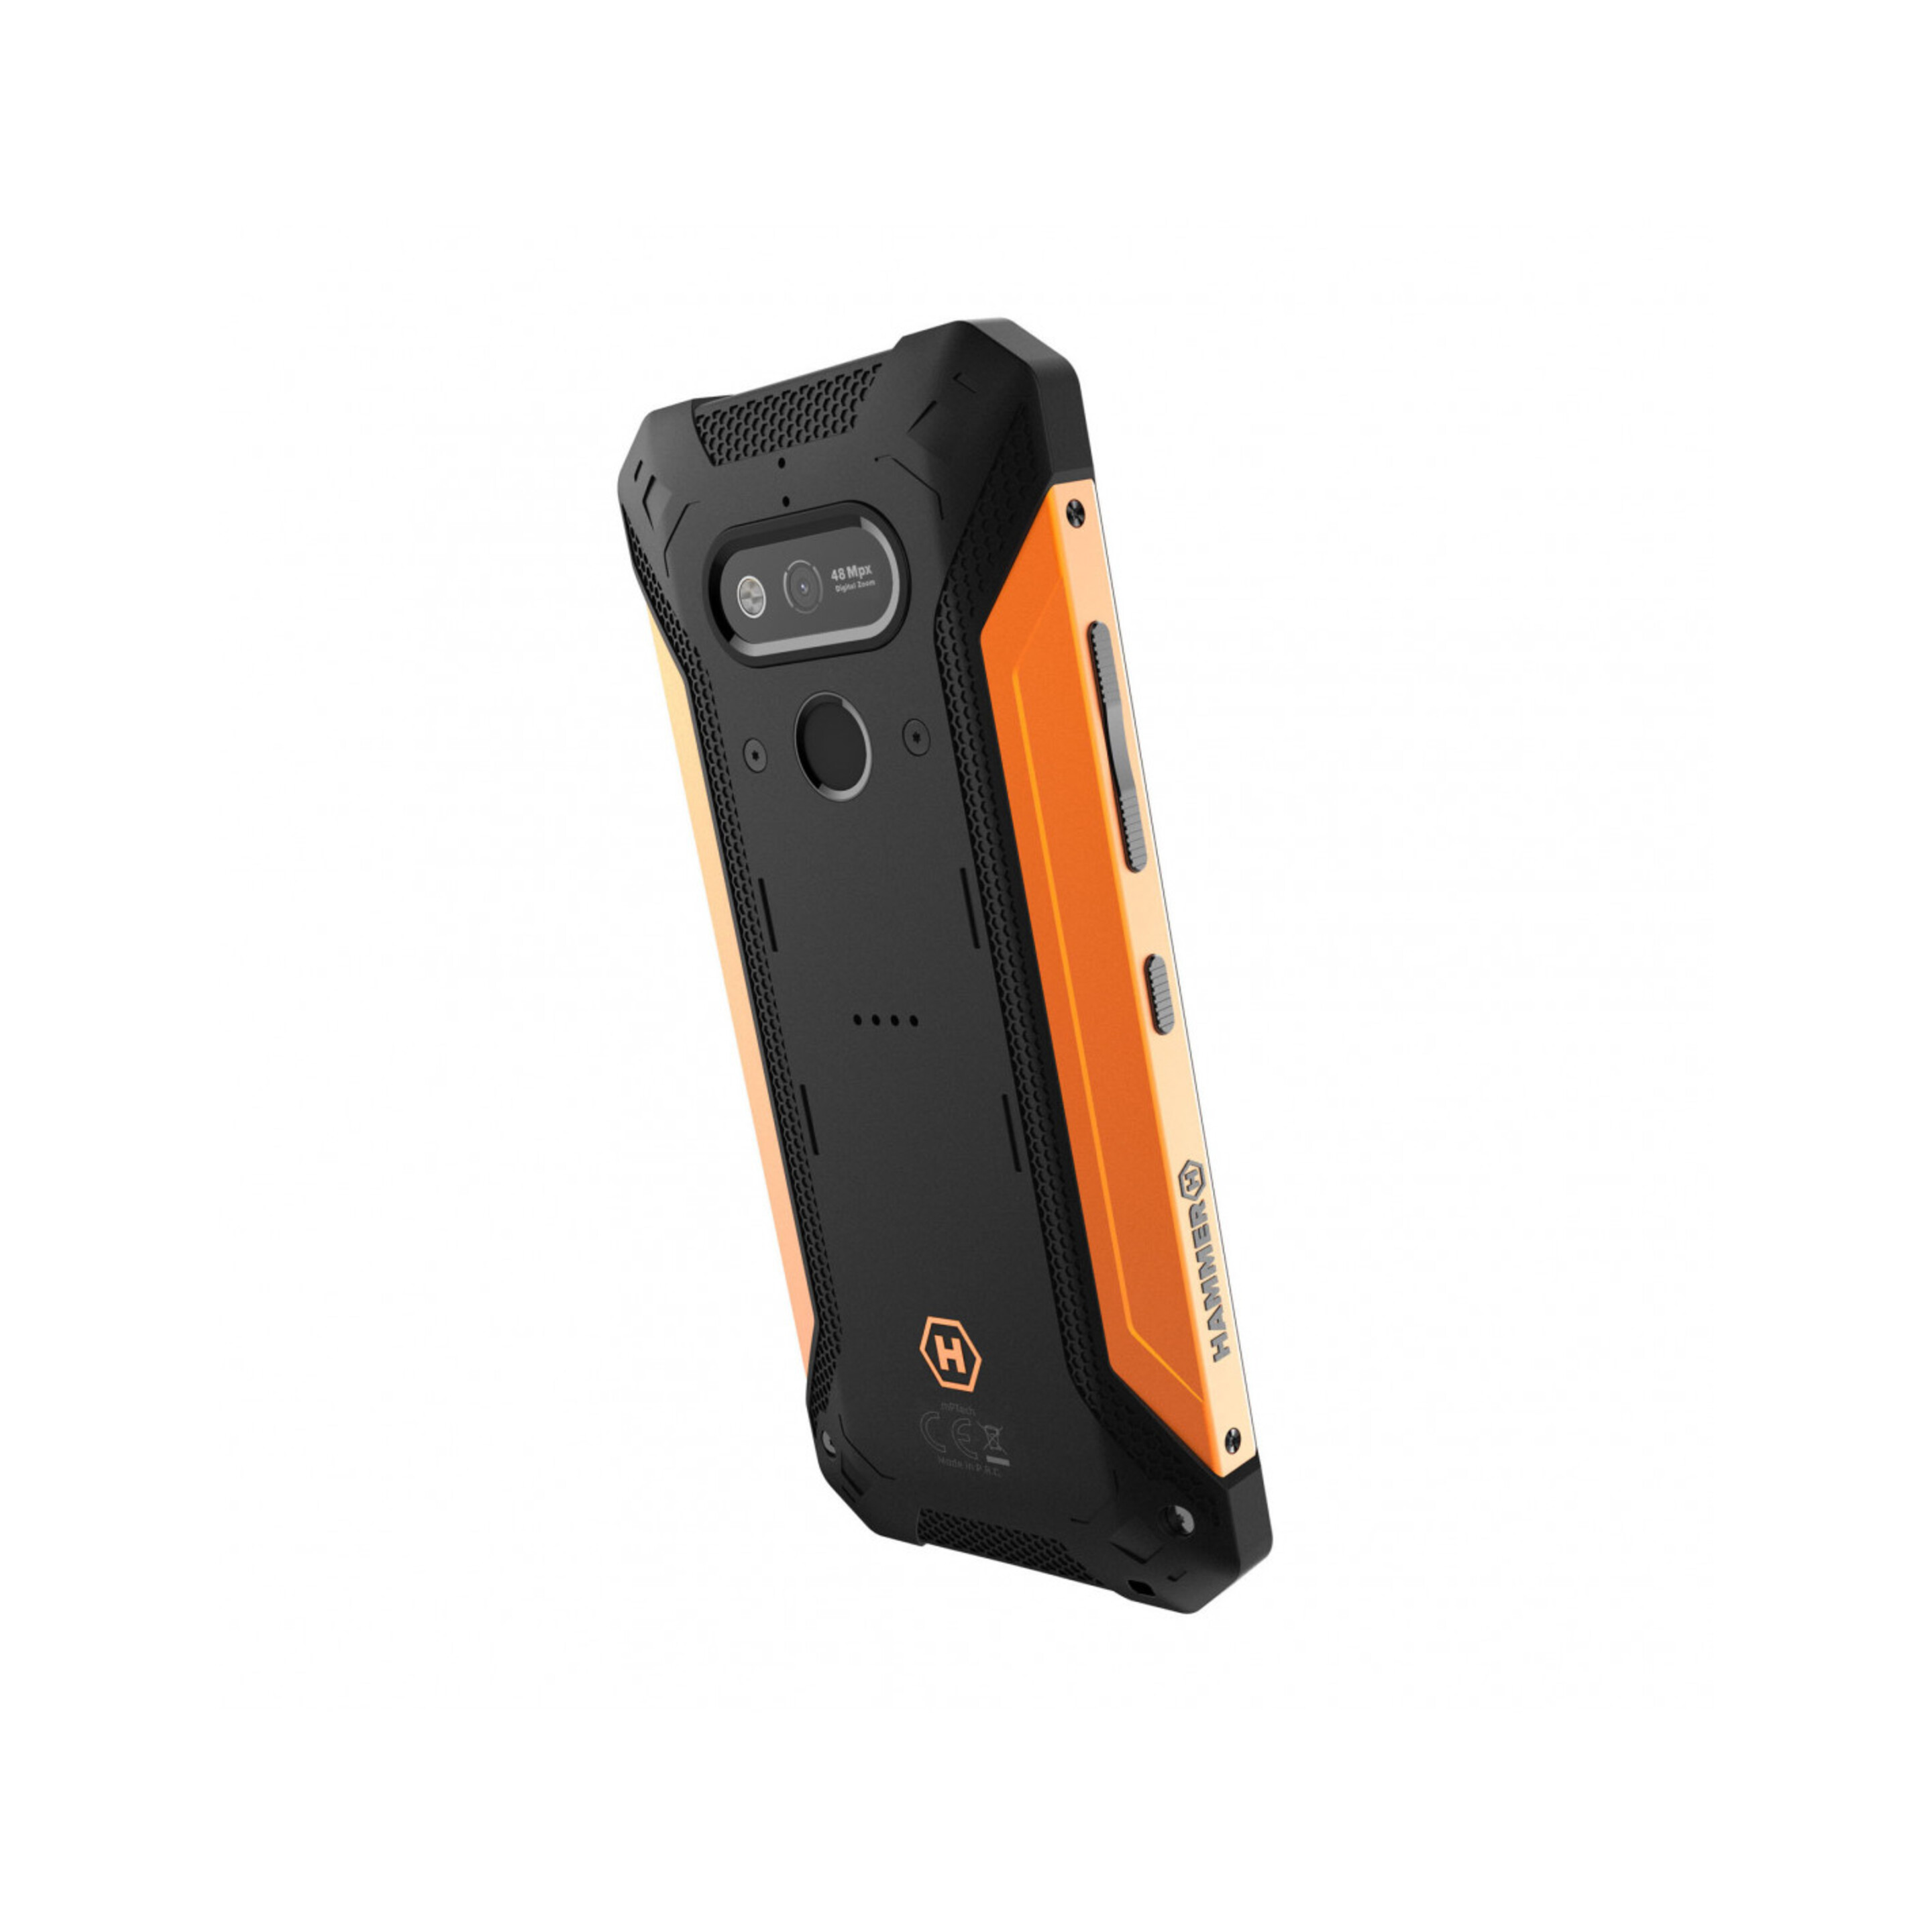 Hammer Explorer Pro 5.72" 4g E-sim 6+128gb Black Orange